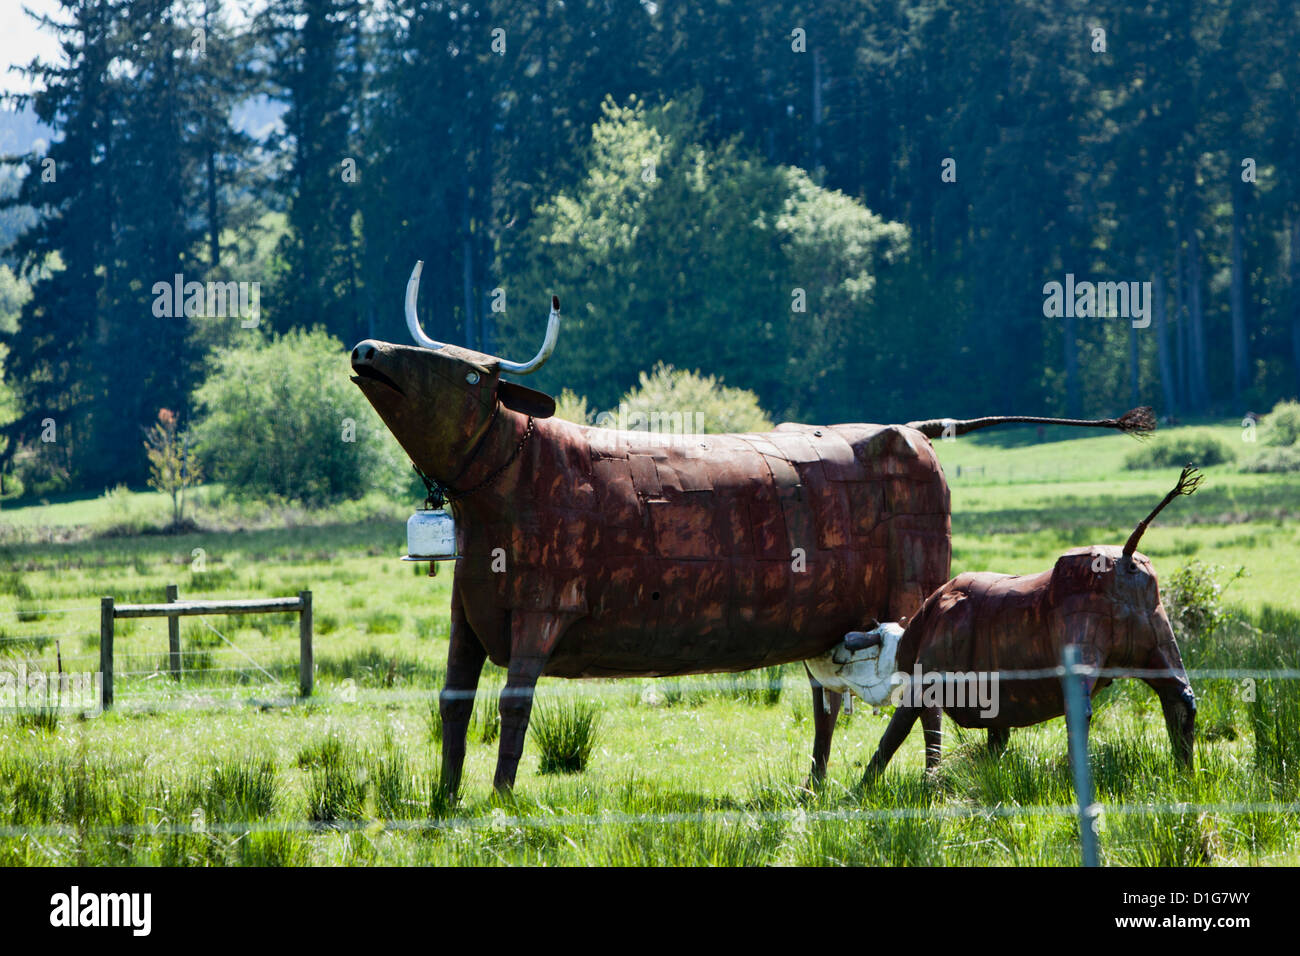 Kuh und Stier Metallskulpturen außerhalb von Olympia, Washington Stockfoto